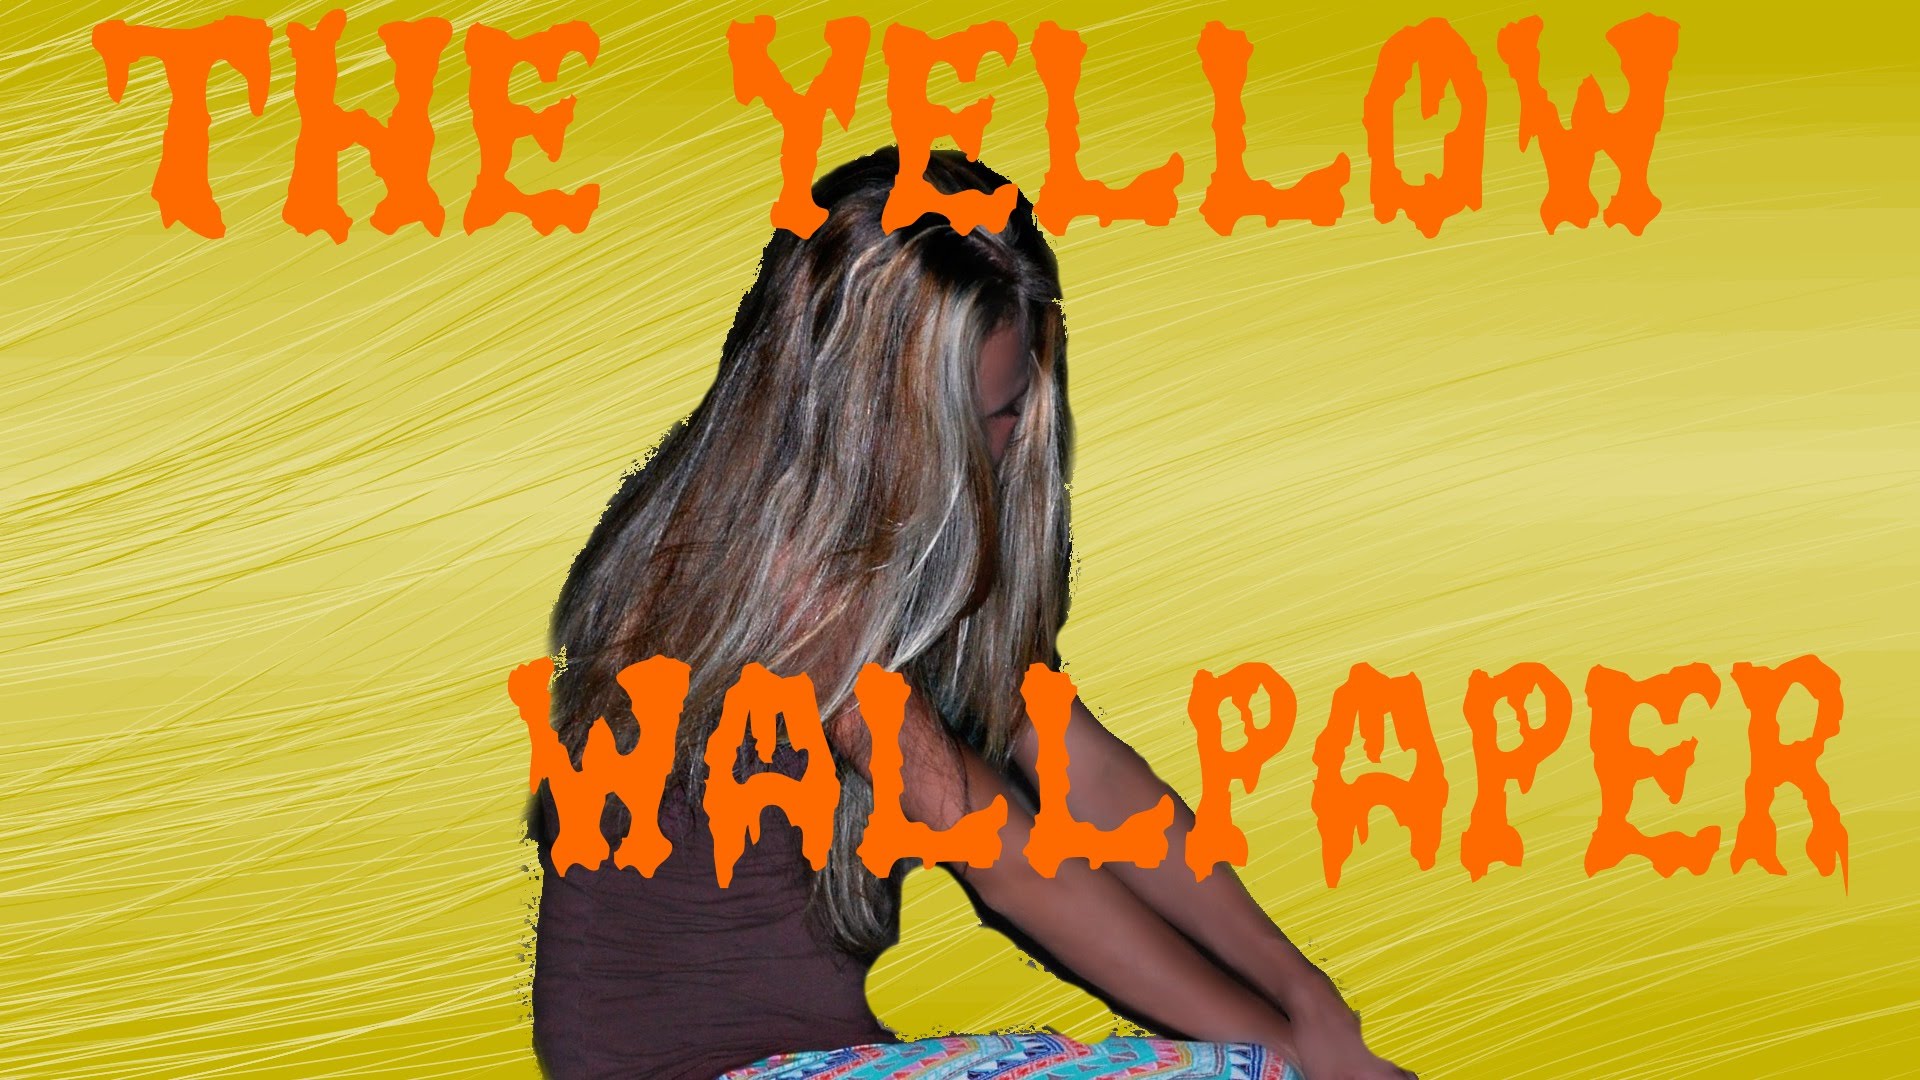 The Yellow Wallpaper Audiobook